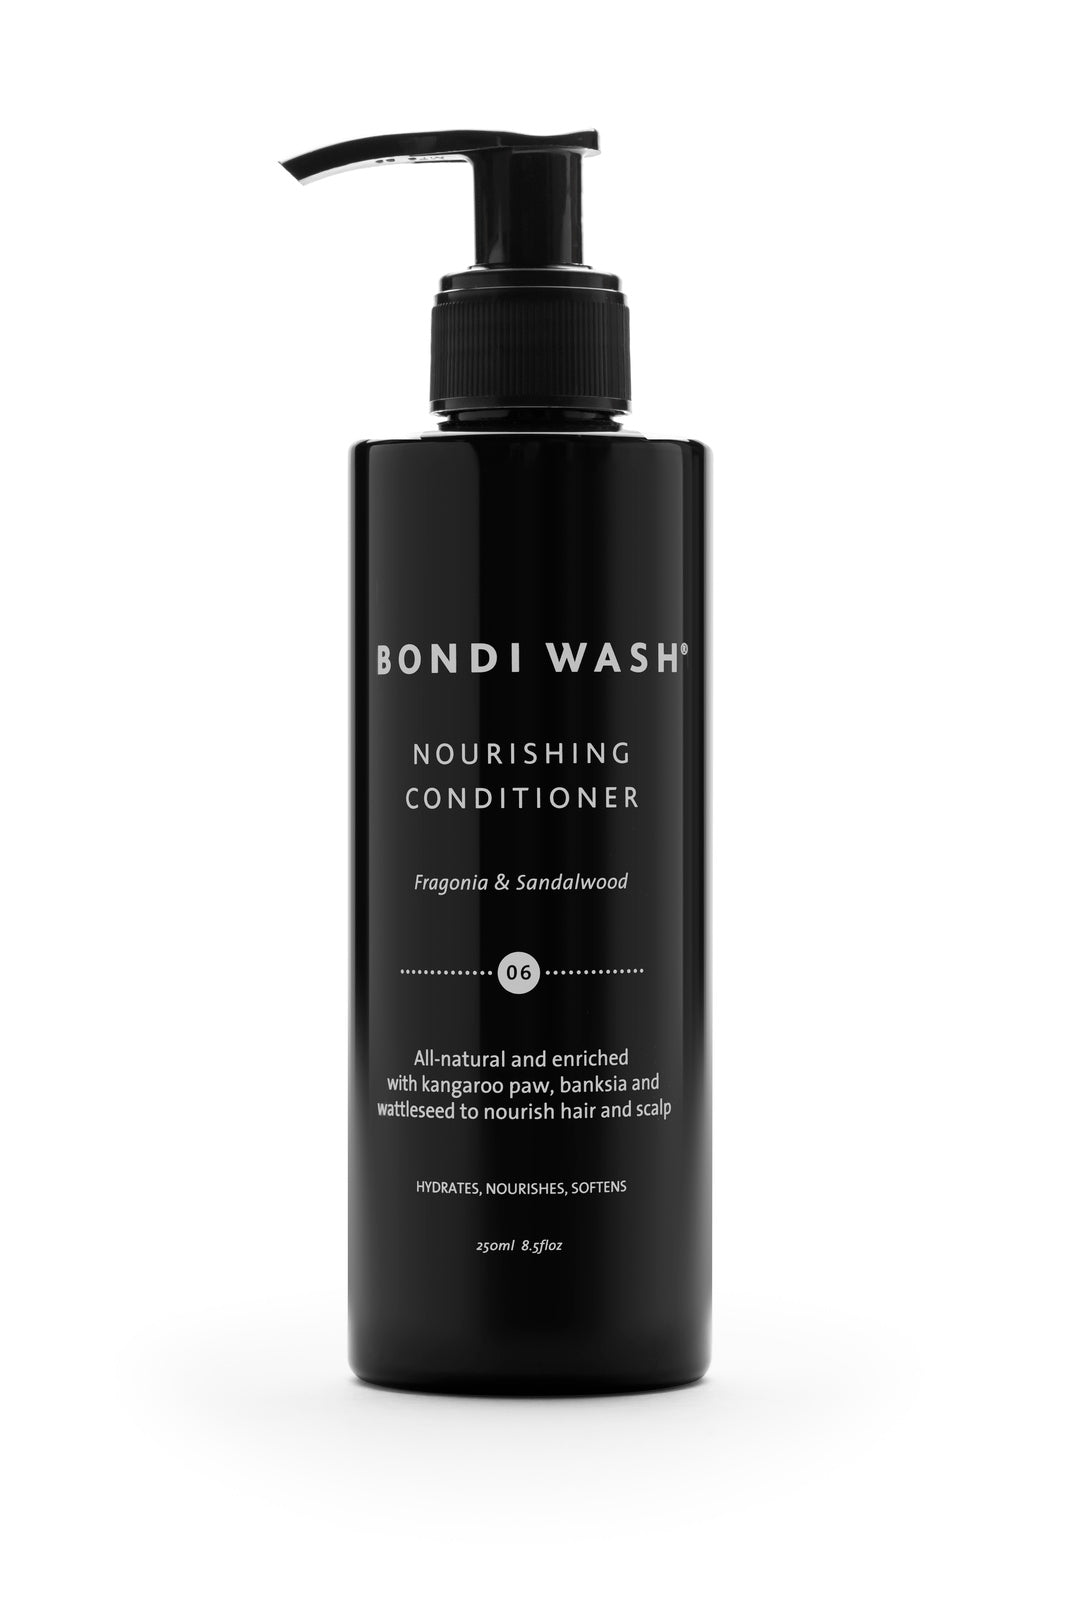 Bondi Wash, natural shampoo, nourishing shampoo, bondi wash nourishing shampoo, nourished nederland, nourished, bondi wash europe, bondi wash nourishing conditioner, nourishing conditioner.